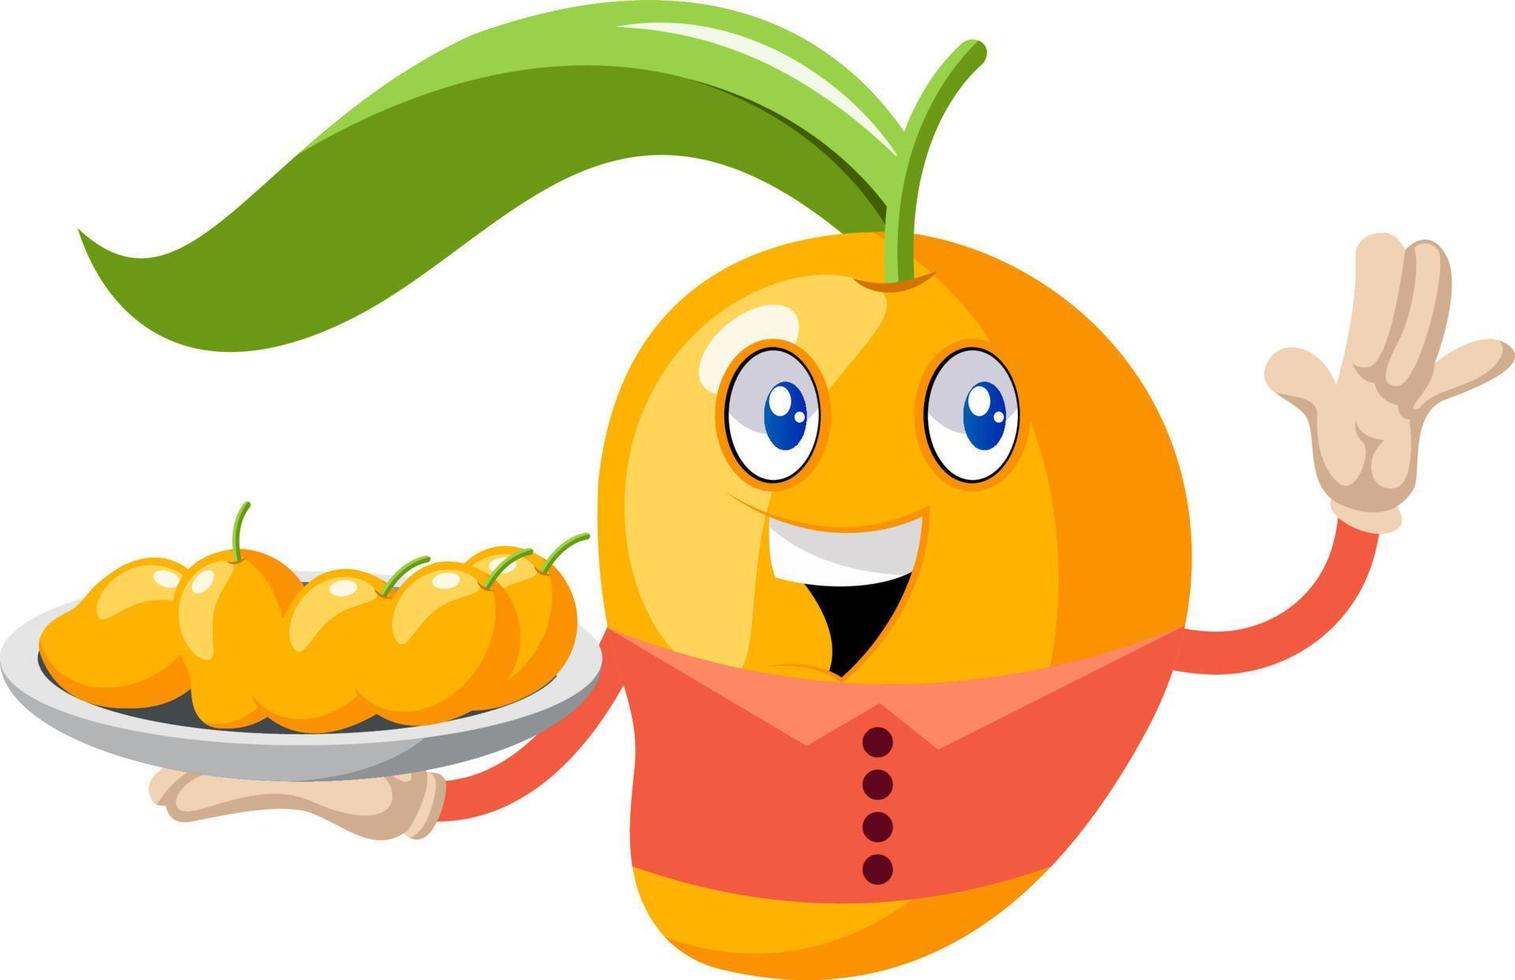 mango innehav mango, illustration, vektor på vit bakgrund.